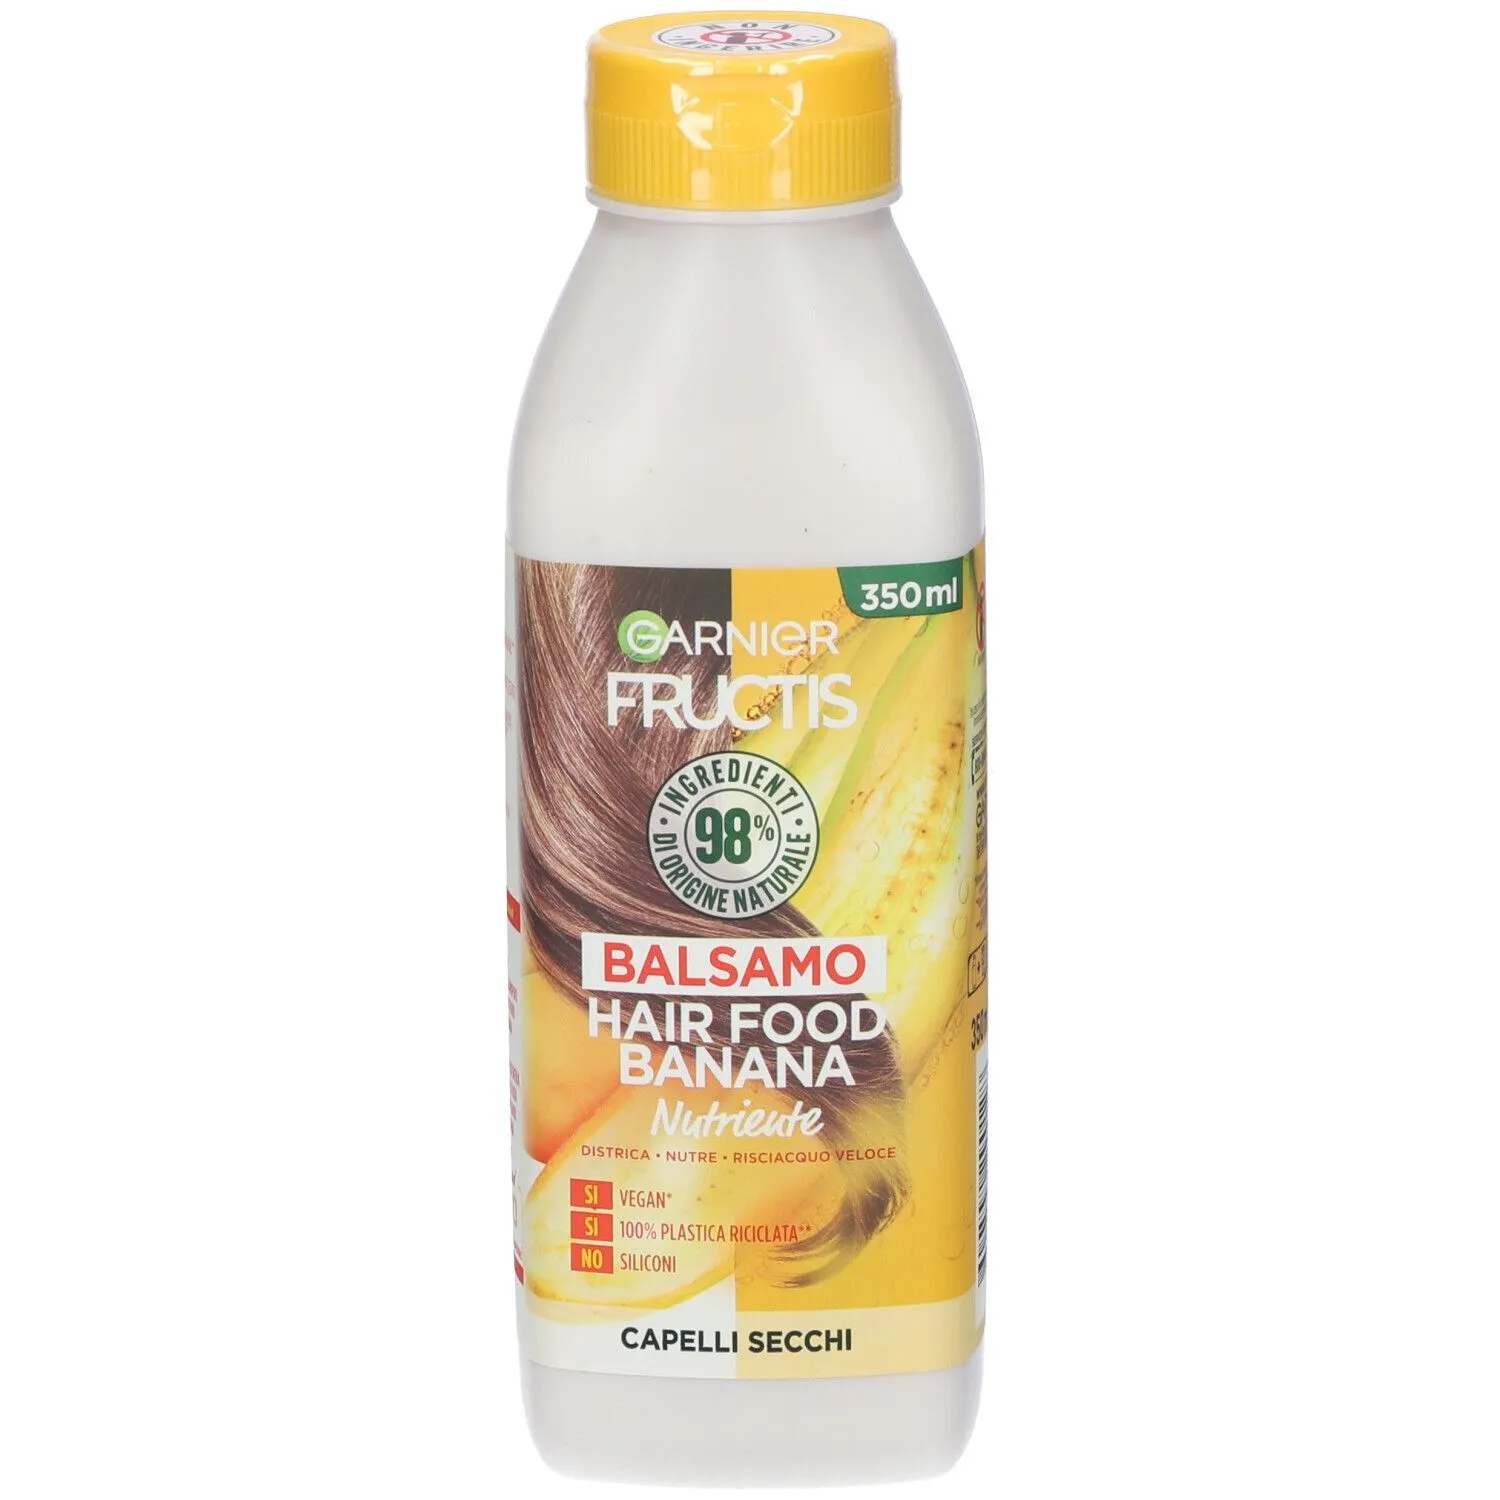  Balsamo Nutriente Fructis Hair Food, Balsamo nutriente alla banana per capelli secchi, 350 ml